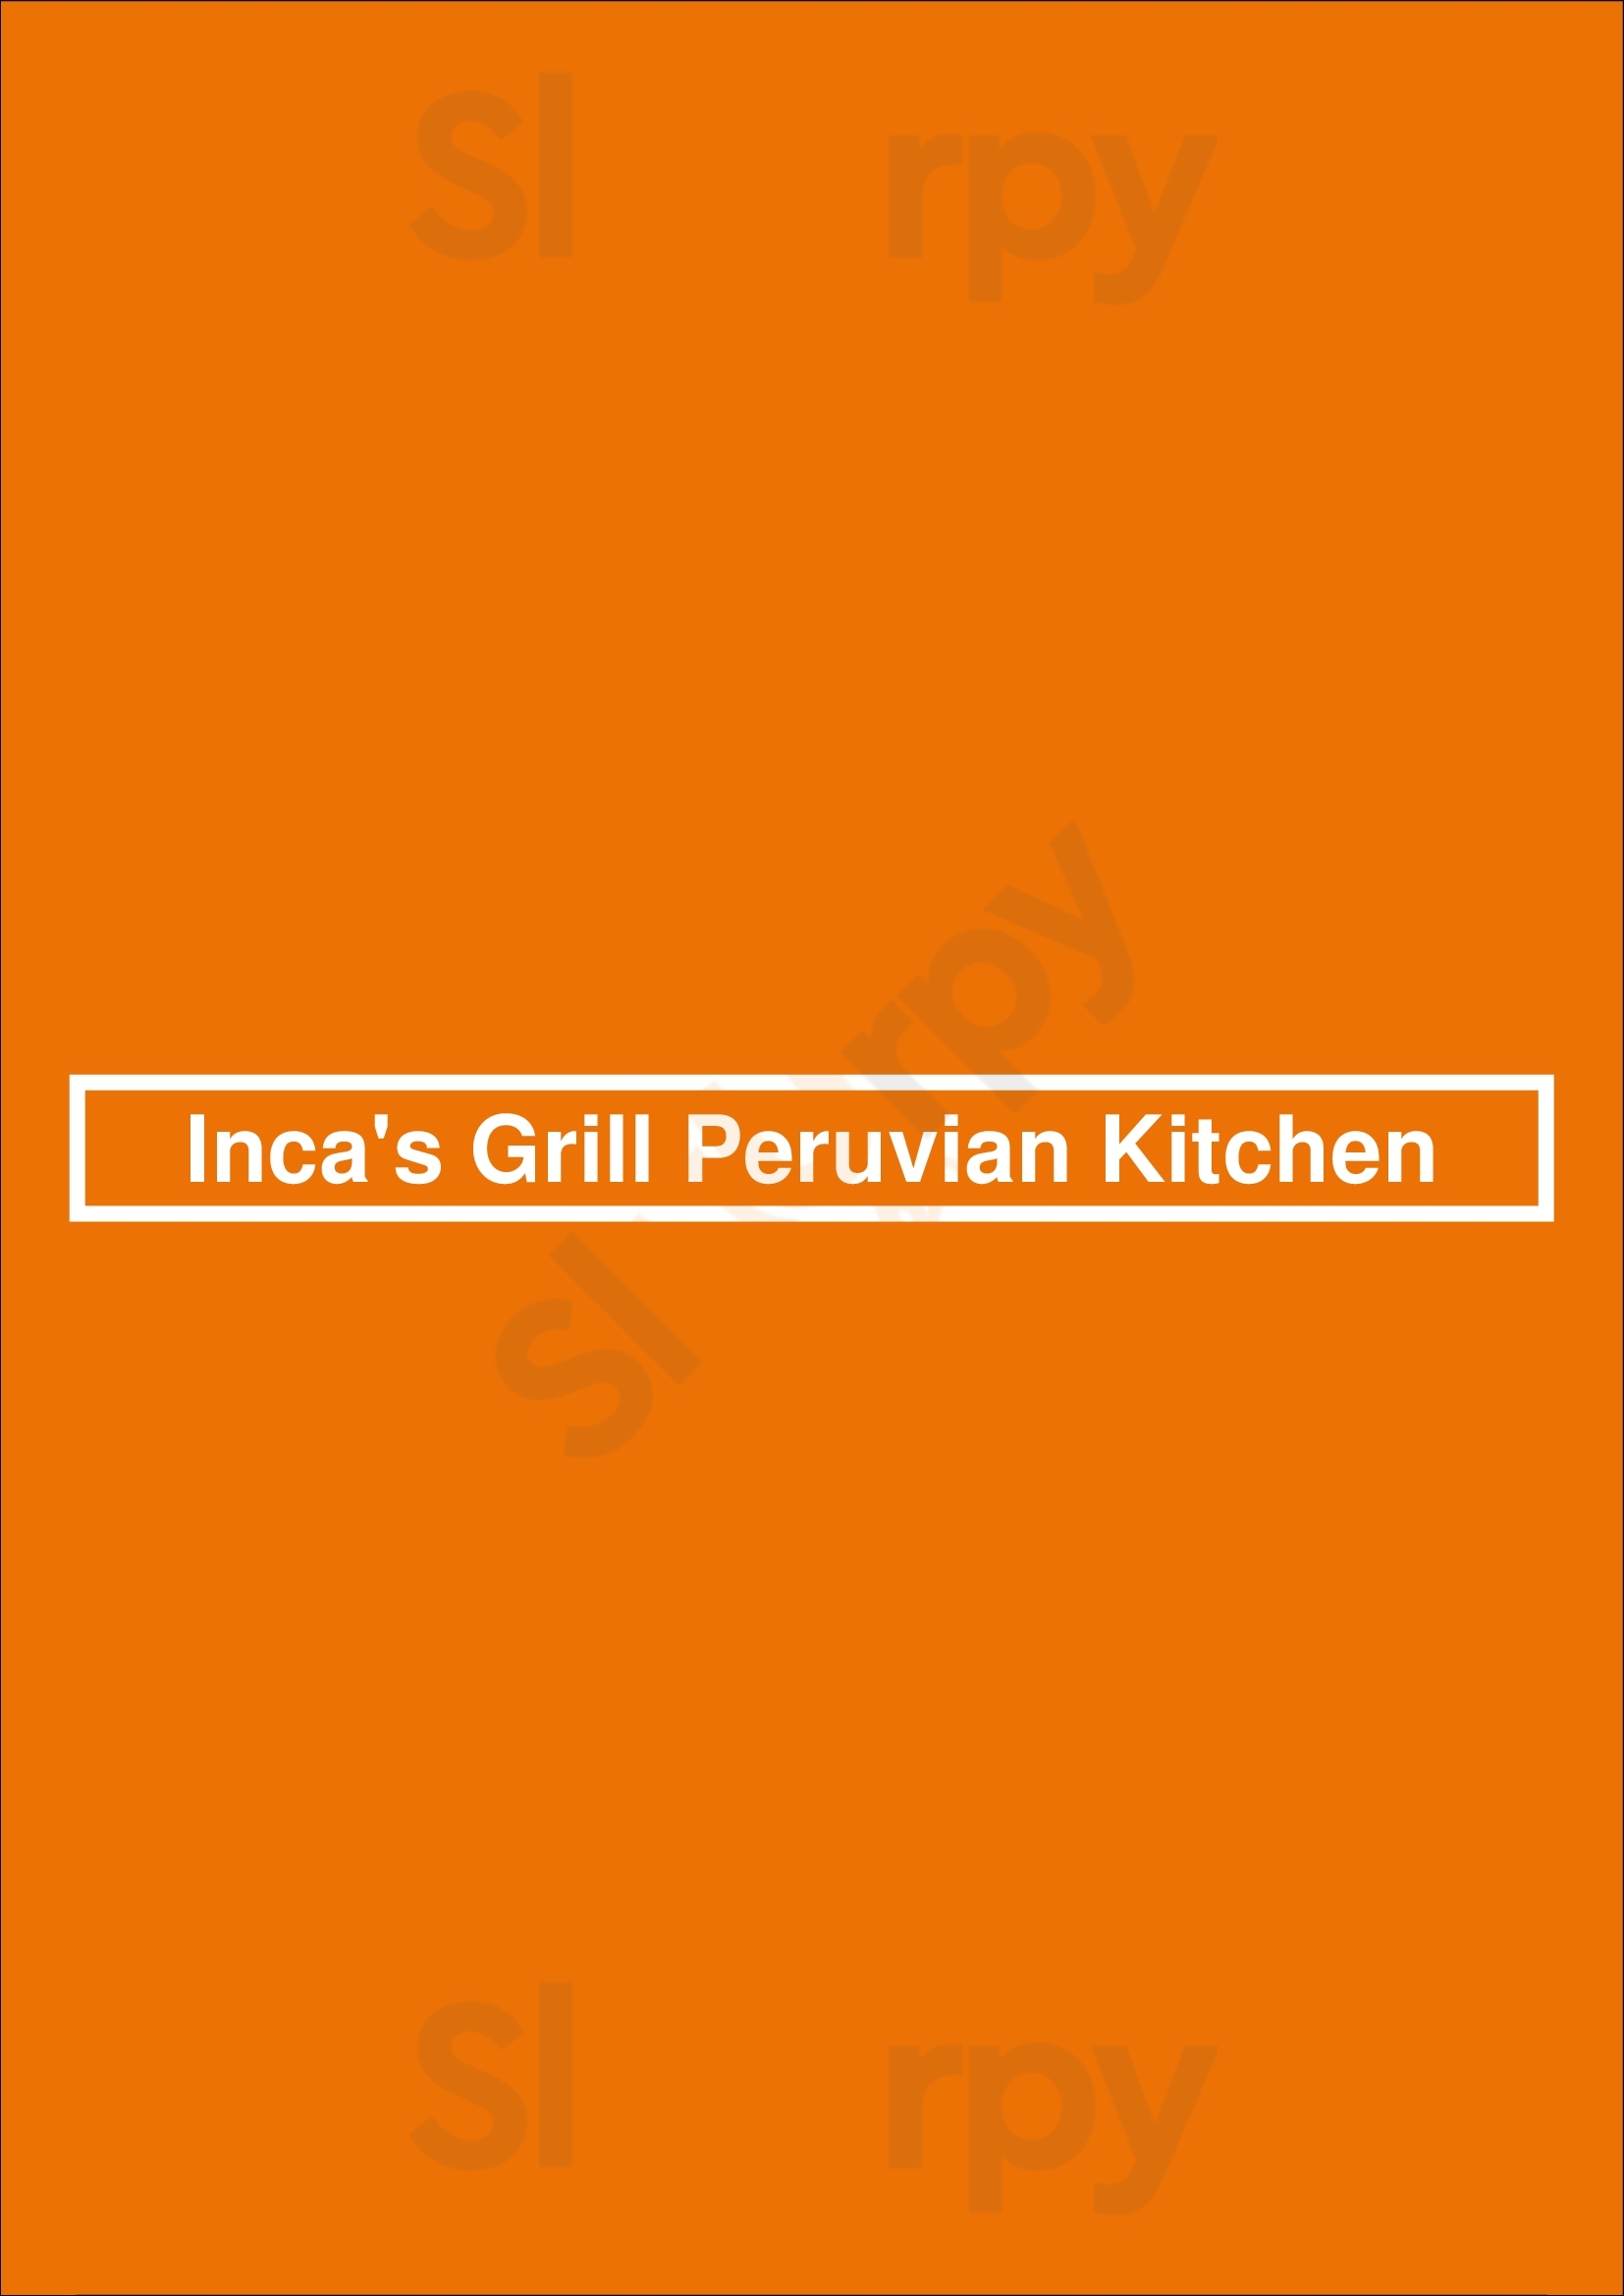 Inca's Grill Peruvian Kitchen Staten Island Menu - 1